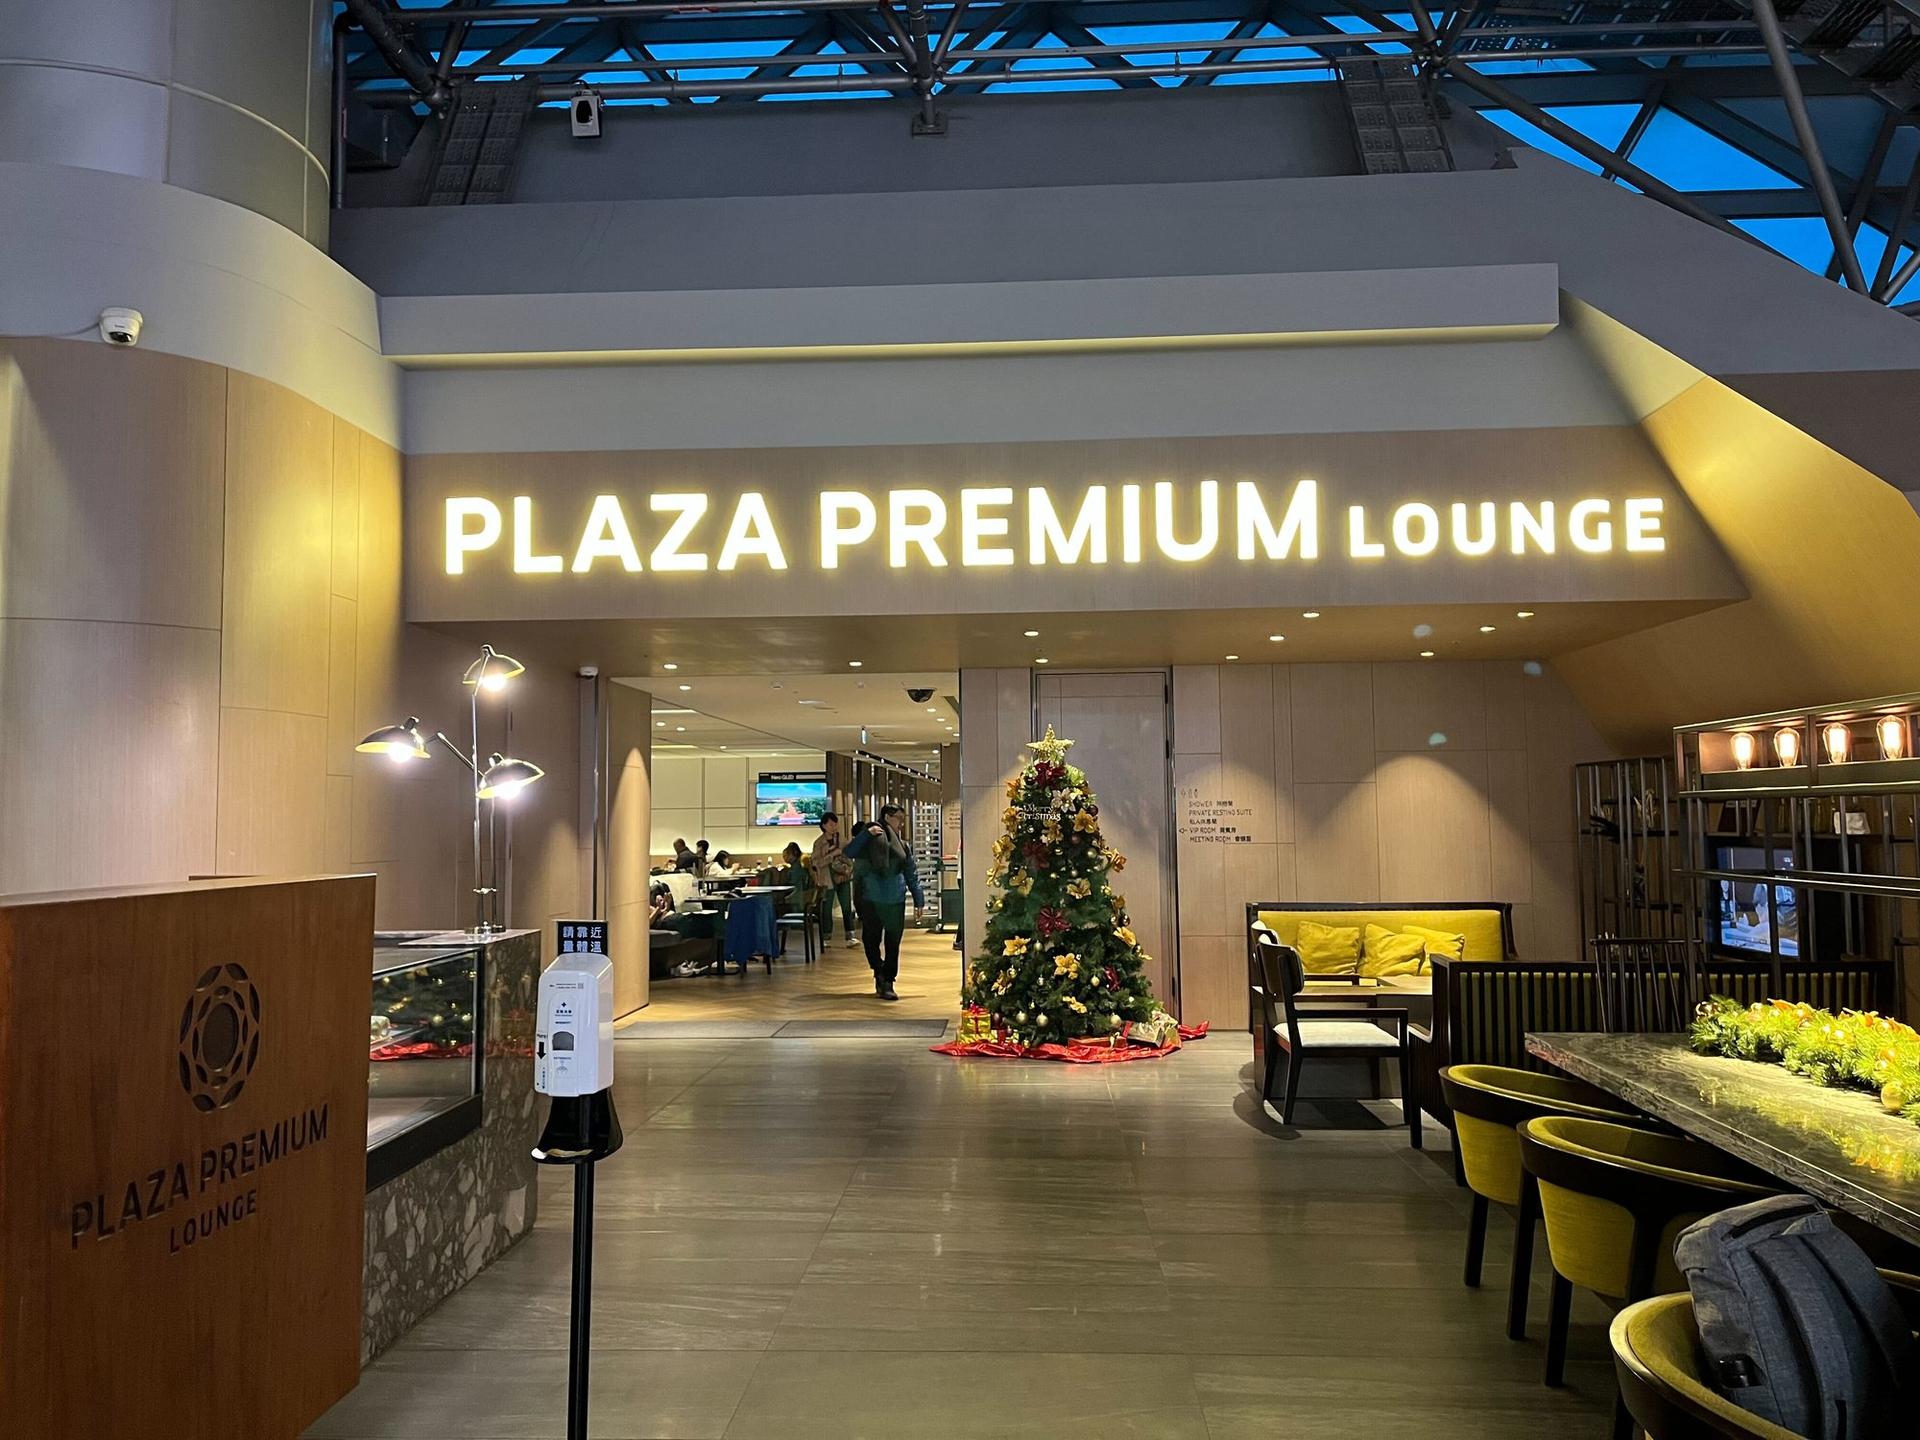 Plaza Premium Lounge (Zone A) image 97 of 99